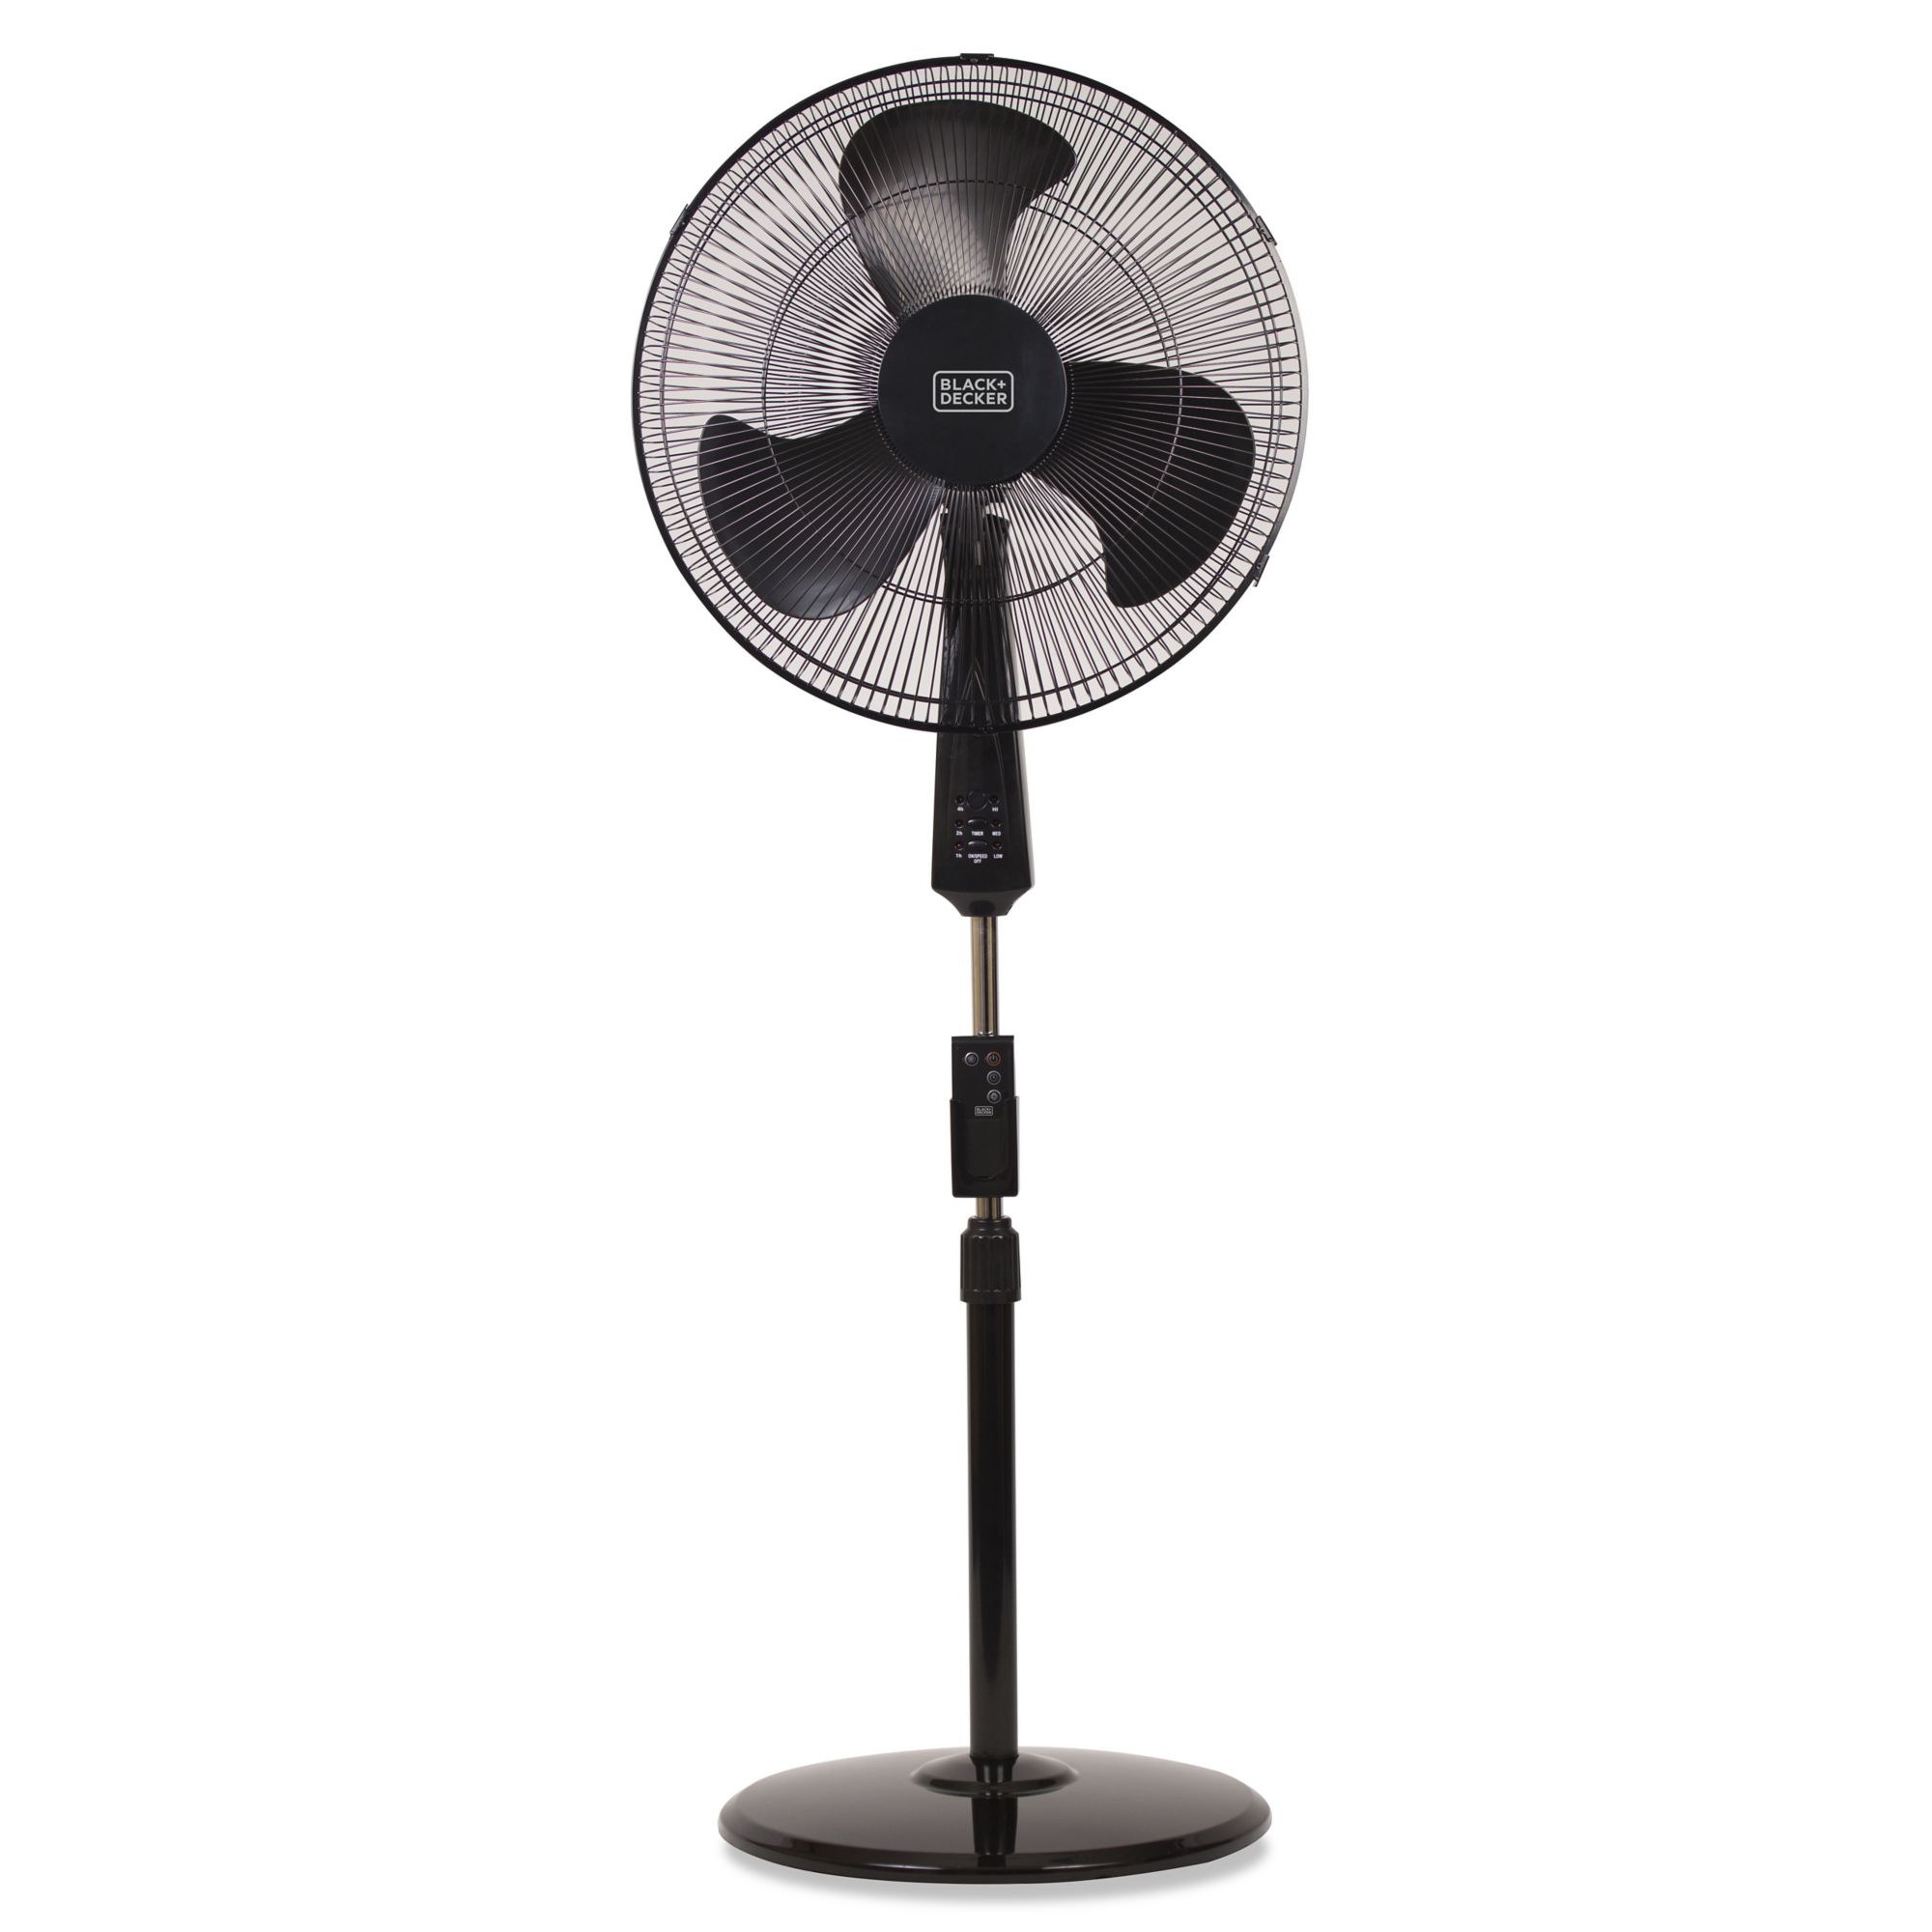 Stand 18. Stand Fan вентилятор. Вентилятор на стойке для оборудования. Вентилятор стойка напольный. Стойка для настольного вентилятора.